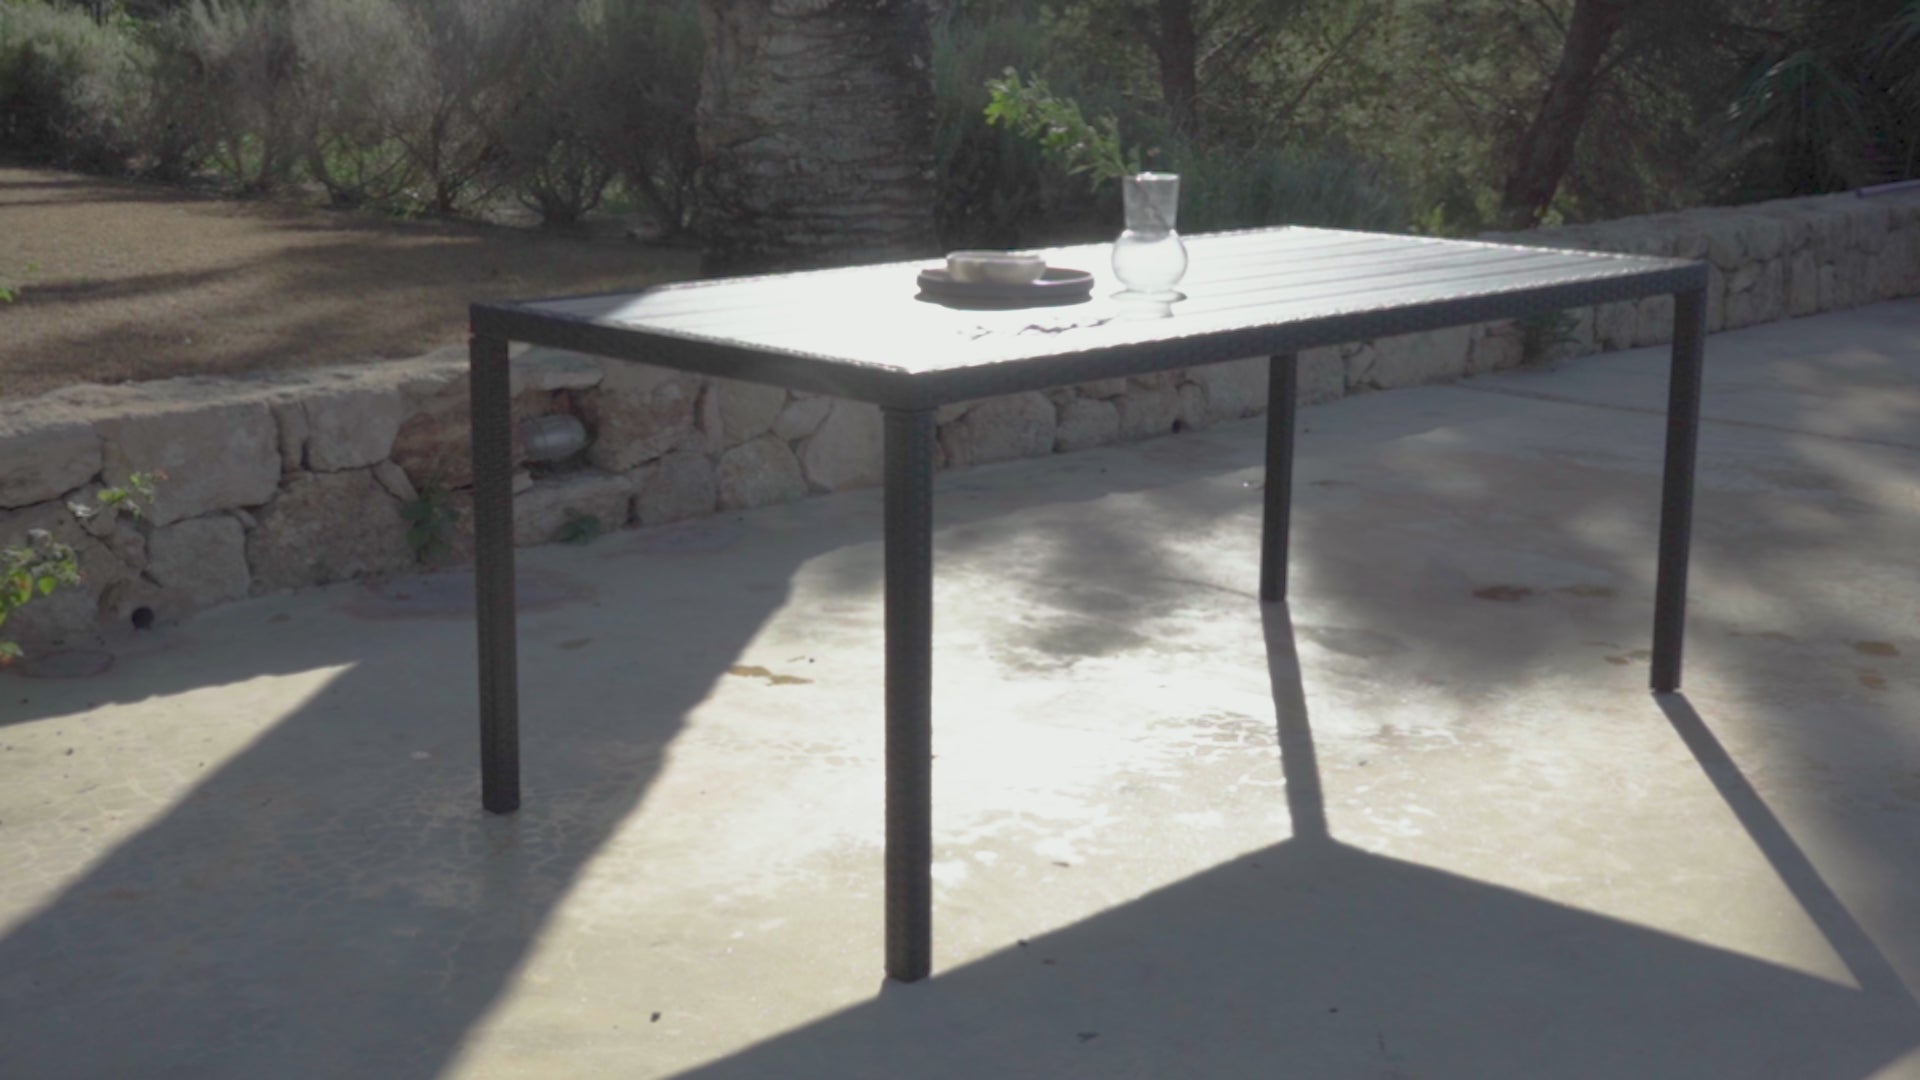 Marston 6 Seater Rattan Outdoor Dining Set - Rattan Garden Furniture - Black - Polywood Top